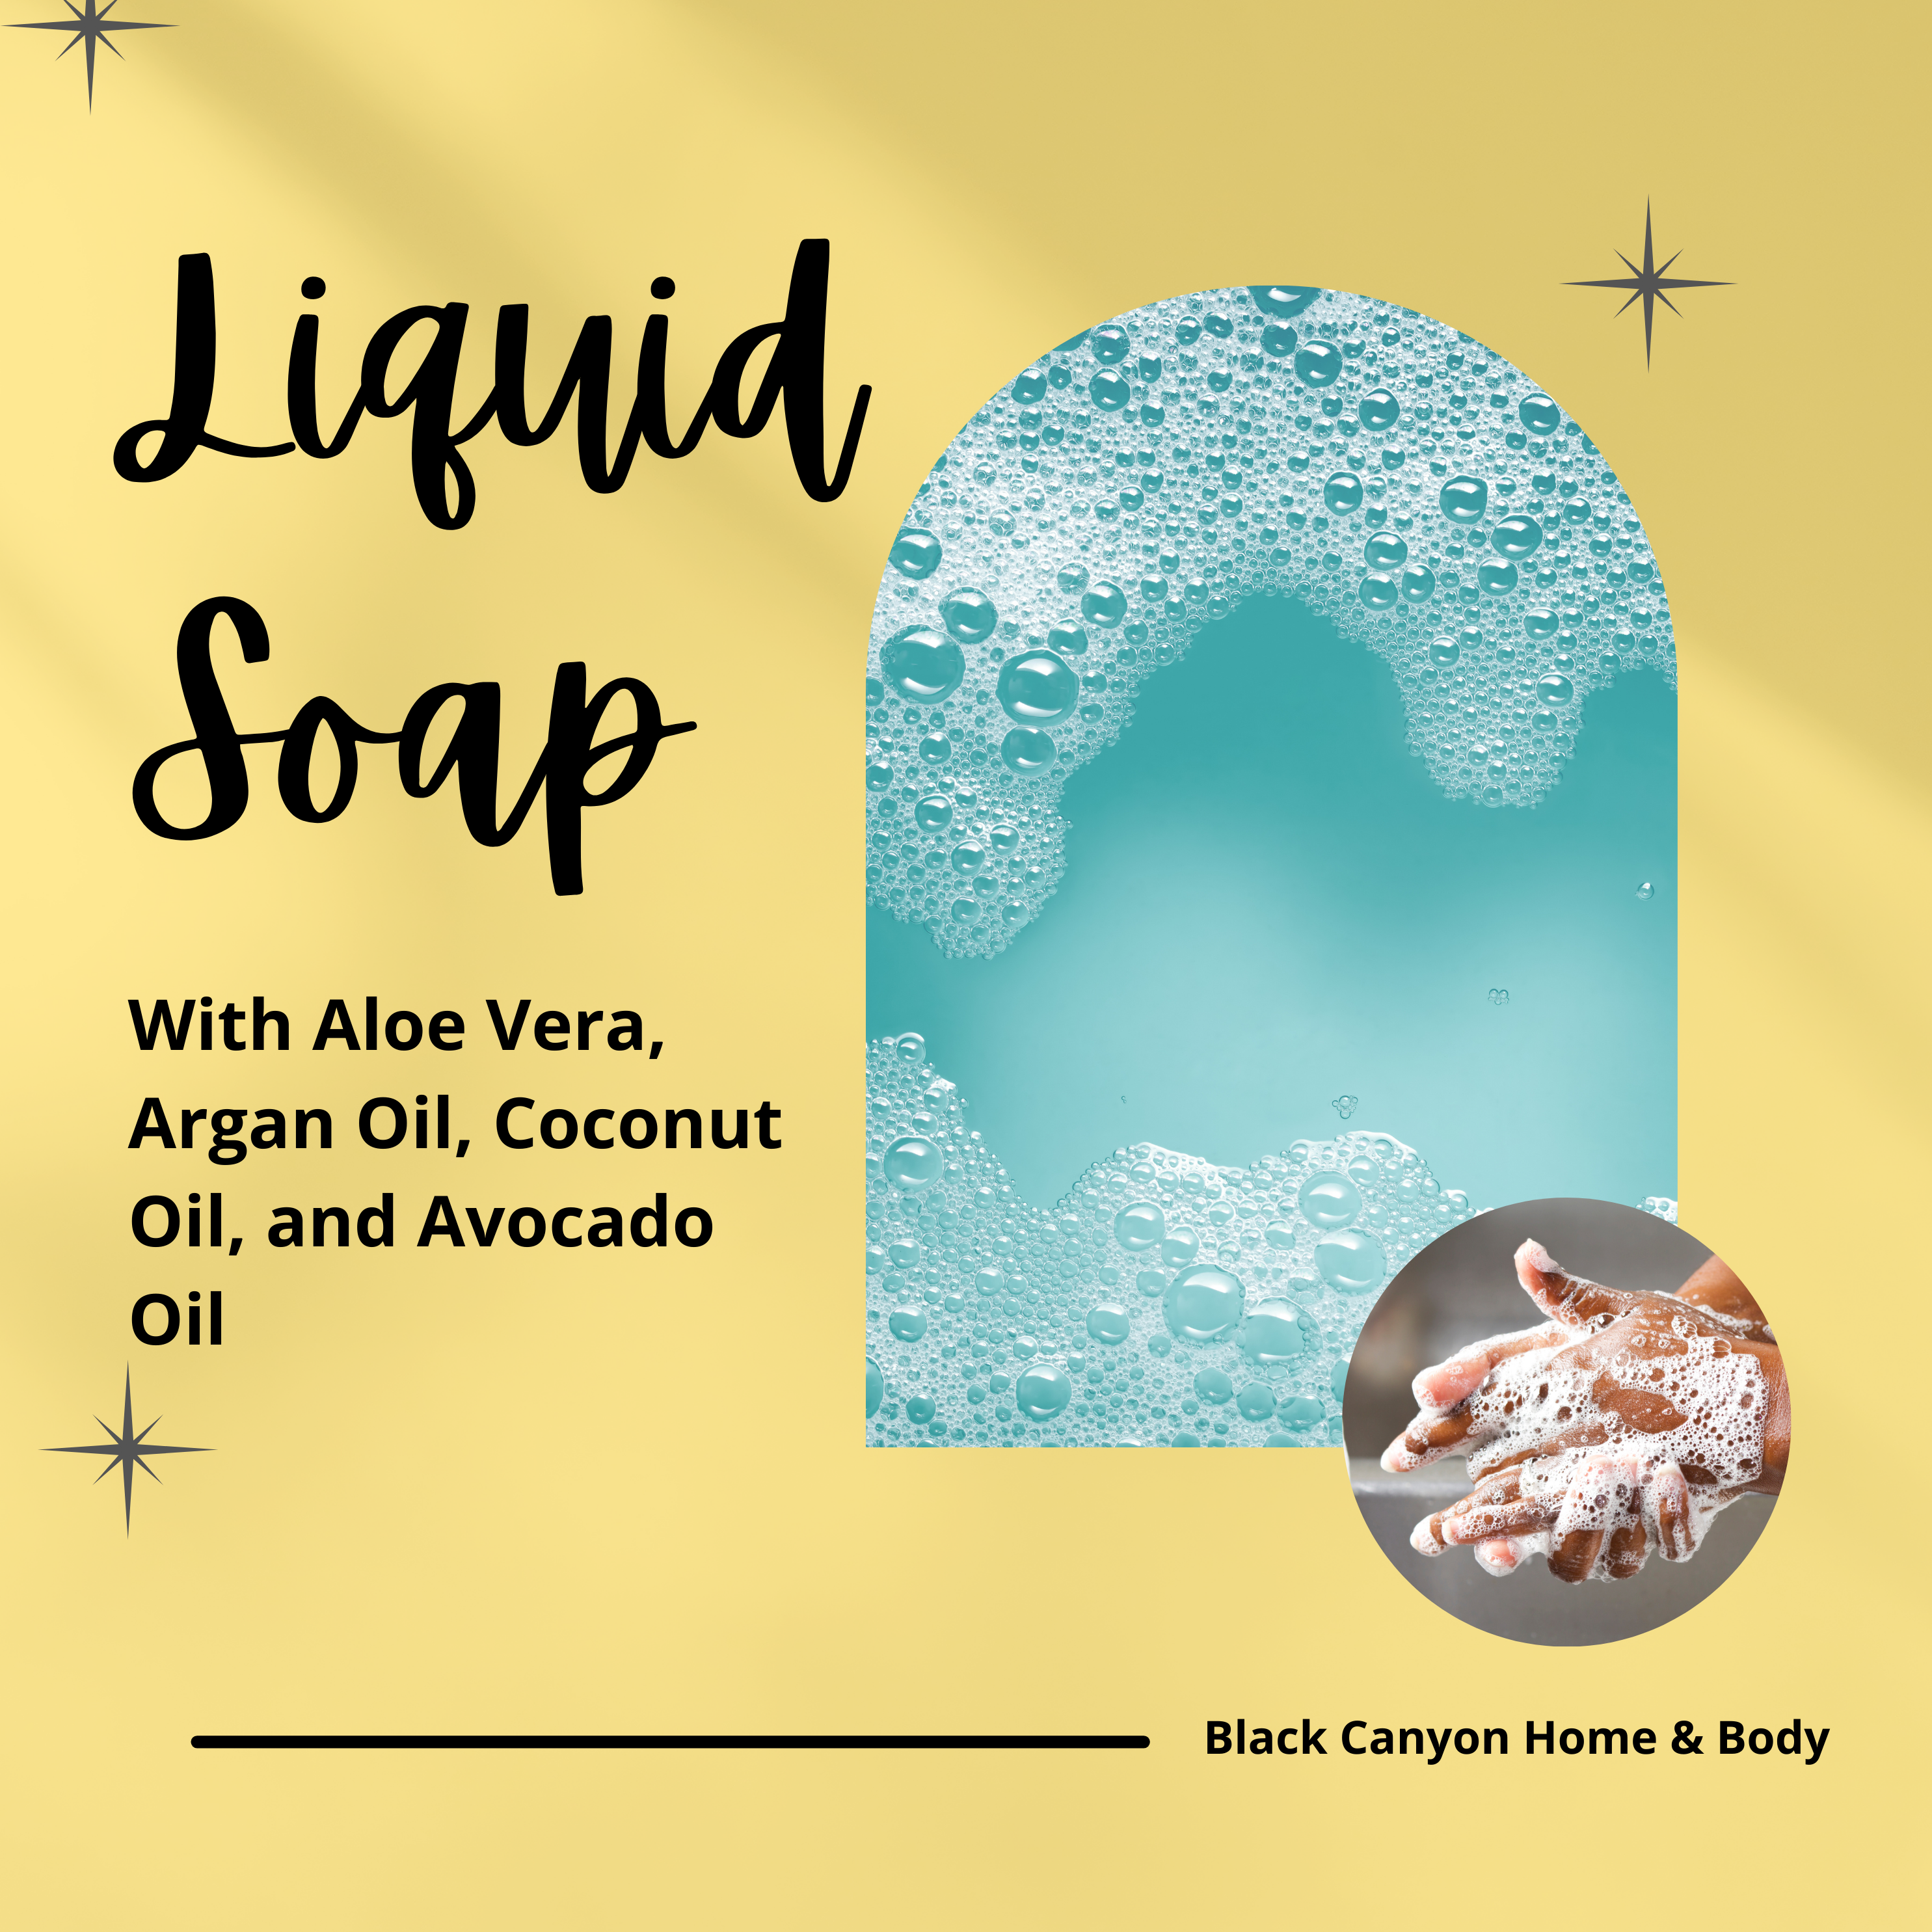 Black Canyon Bergamot & White Tea Scented Liquid Hand Soap